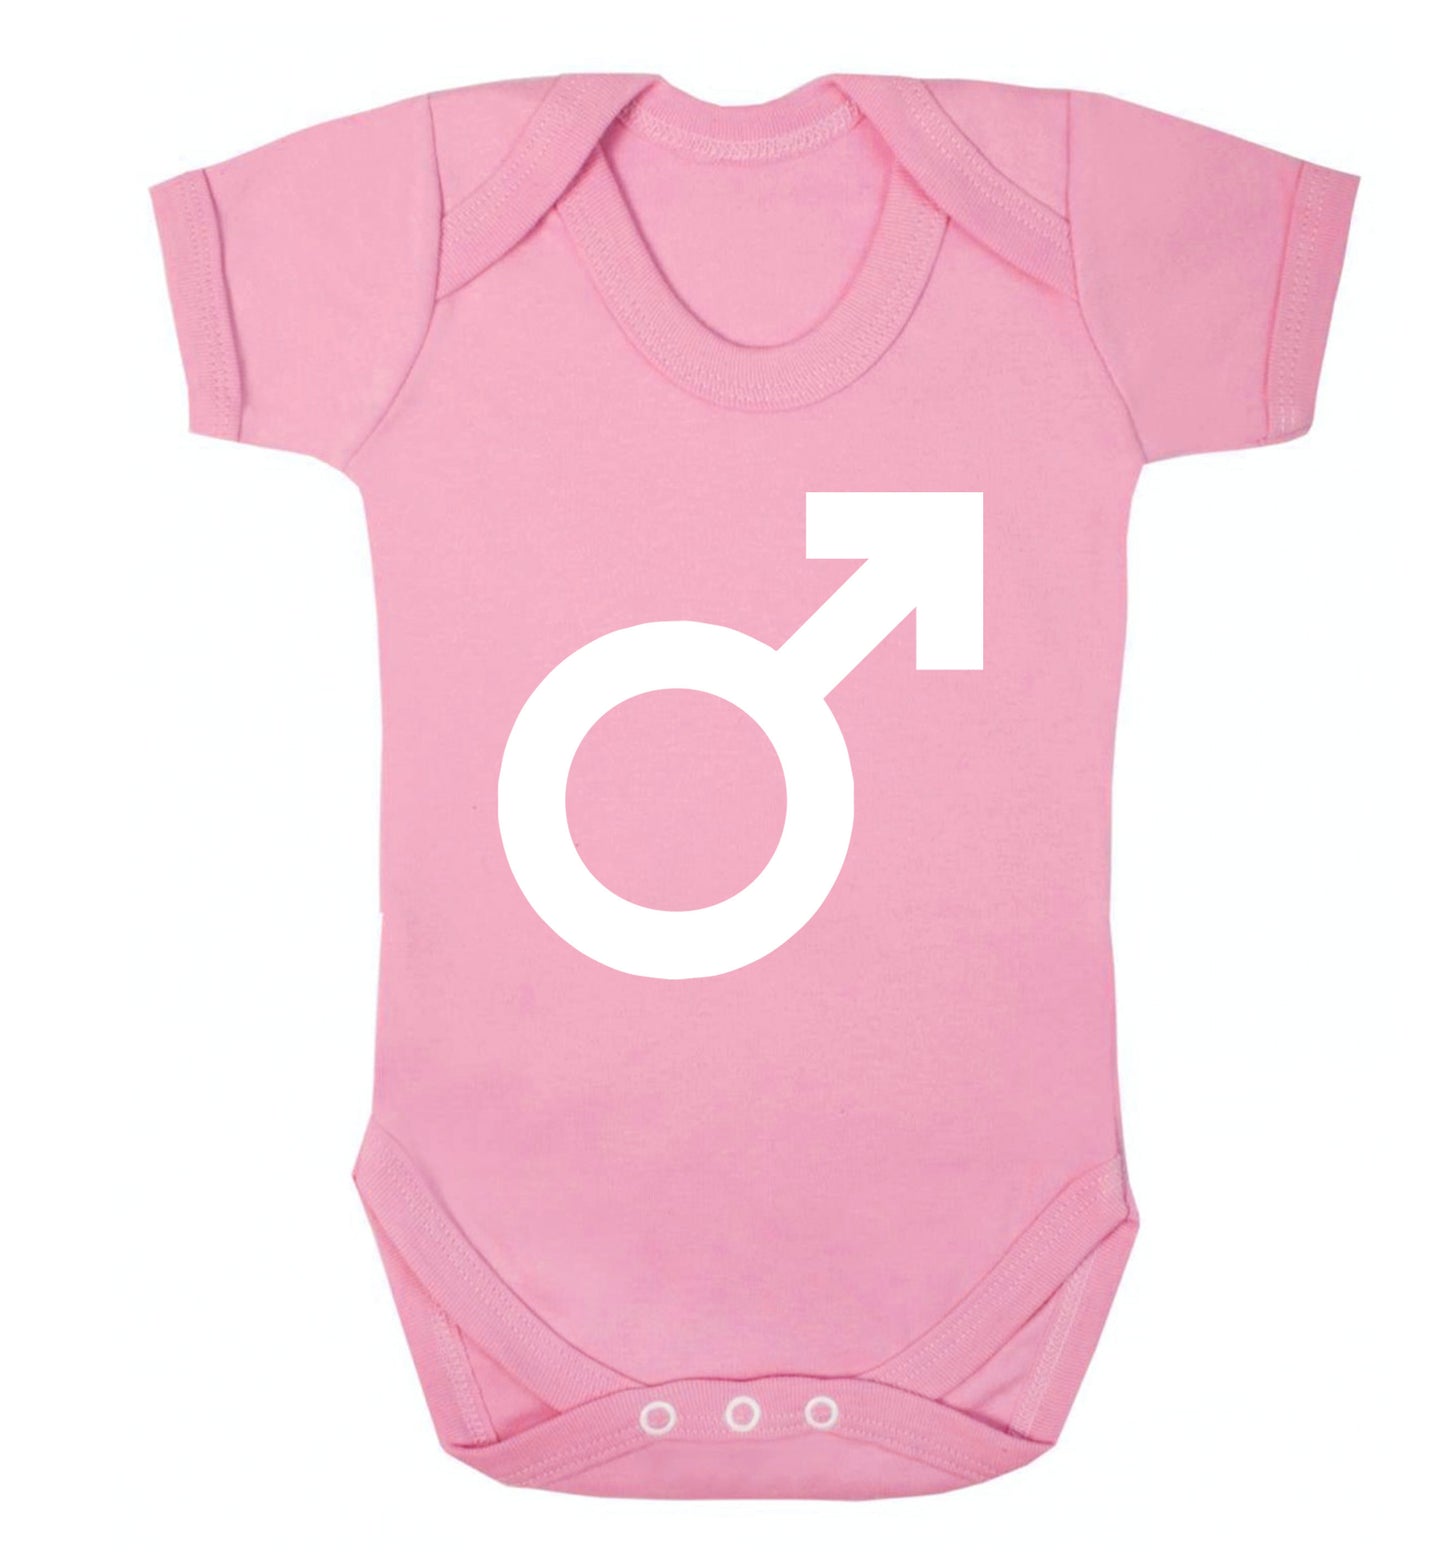 Male symbol large Baby Vest pale pink 18-24 months